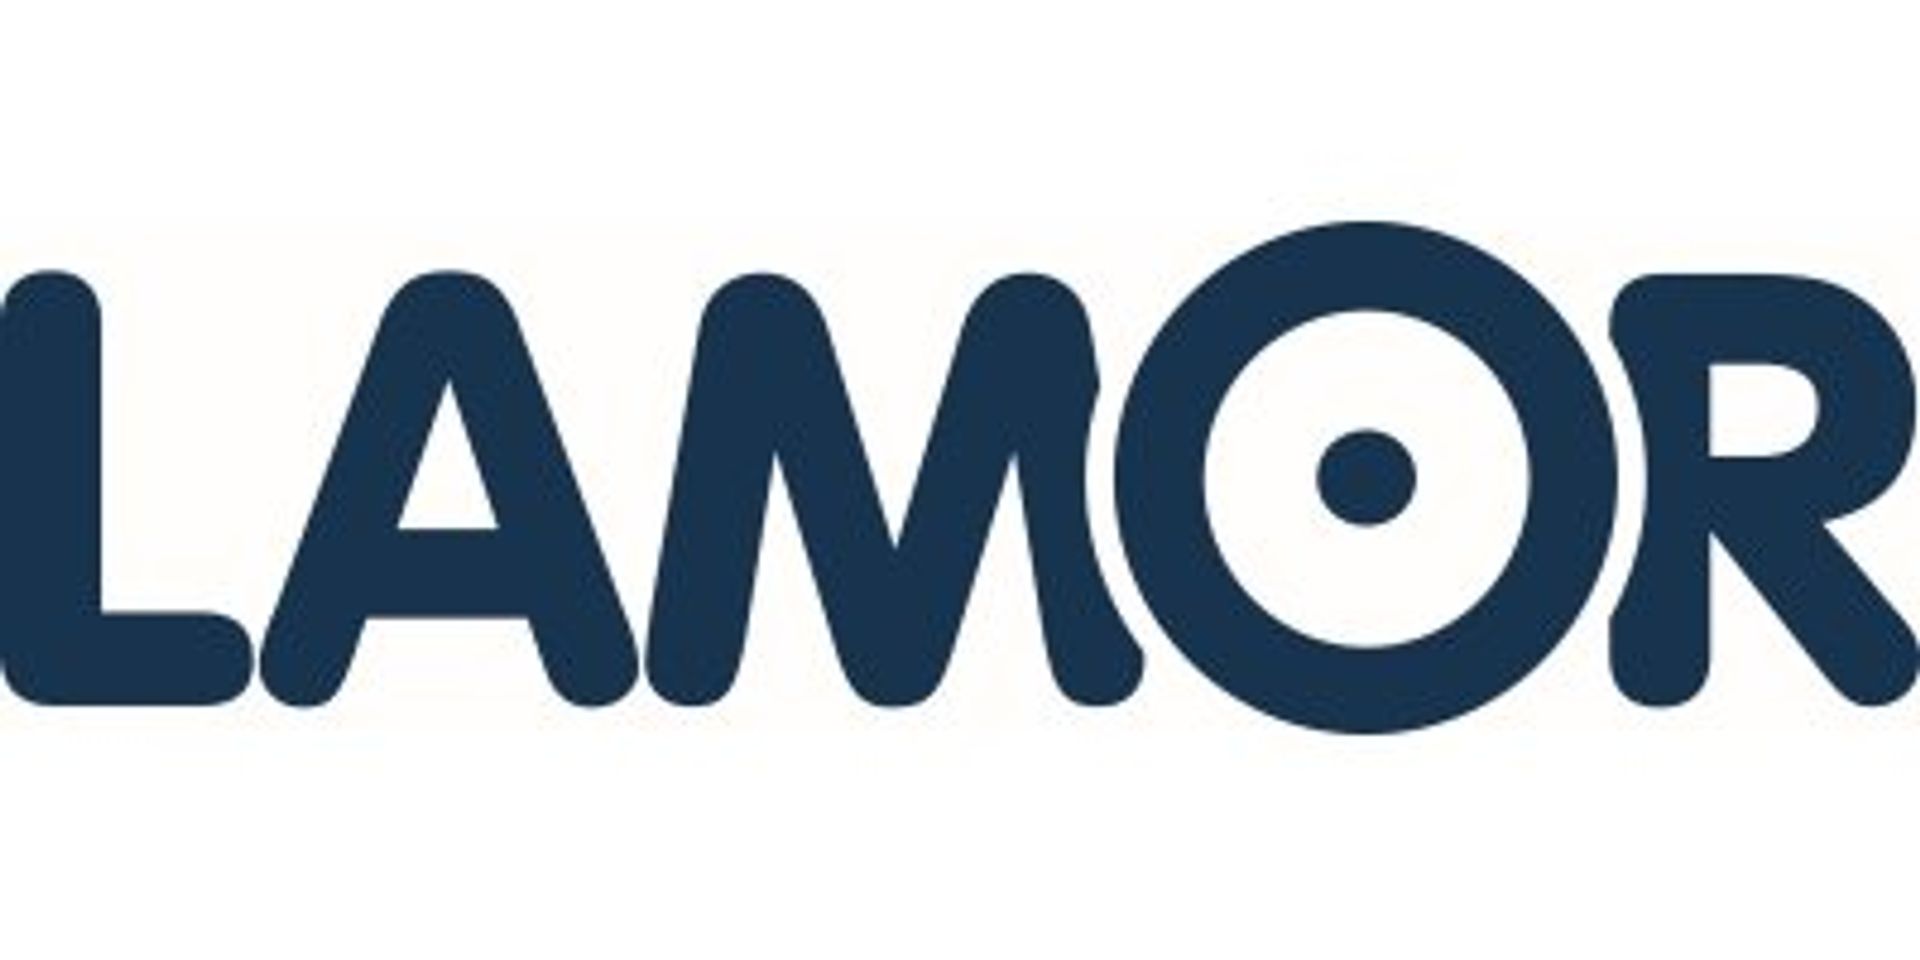 Lamor Corporation Ab